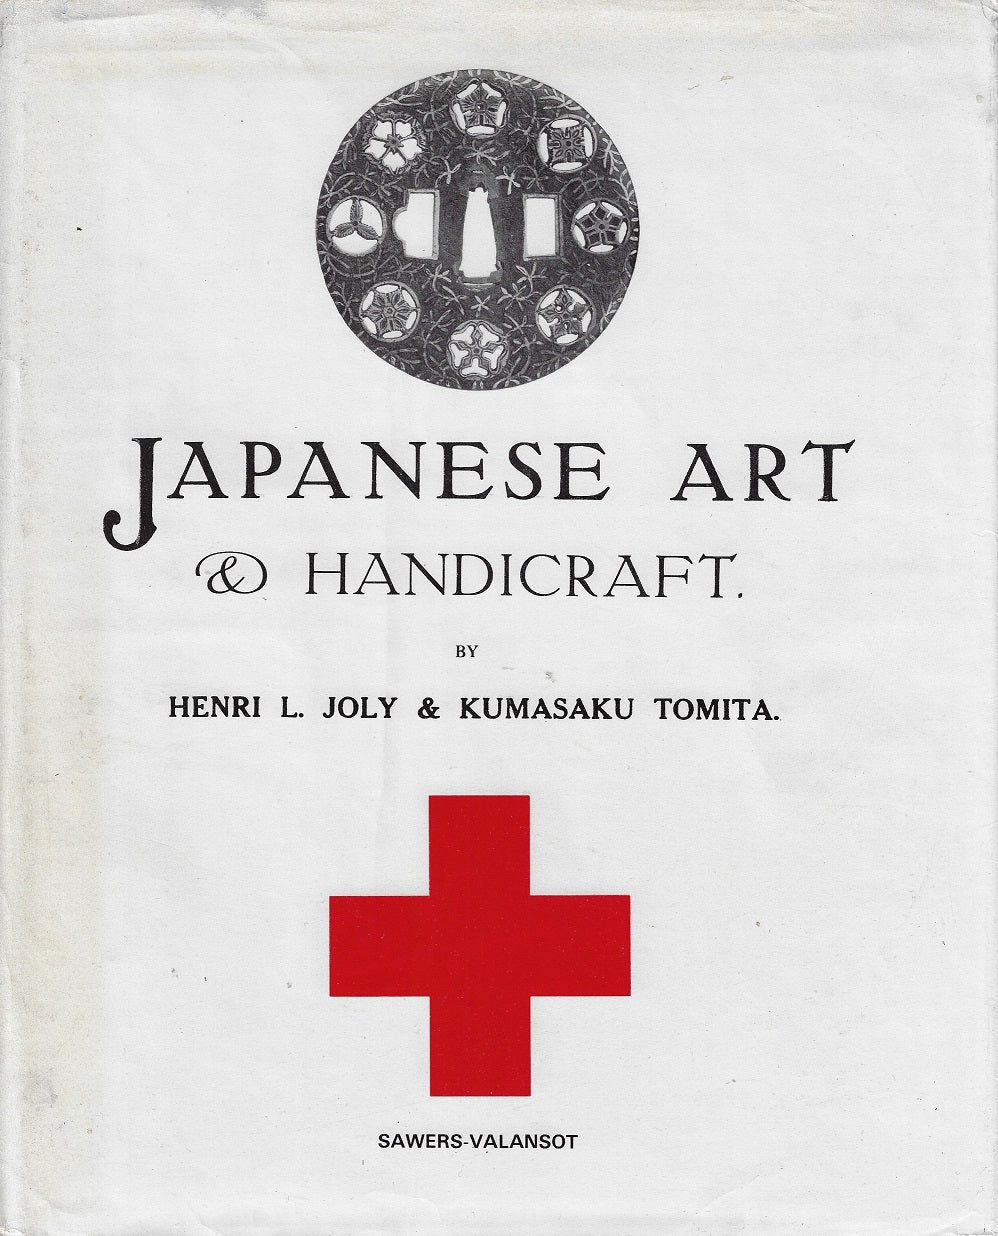 Japanese art & handicraft